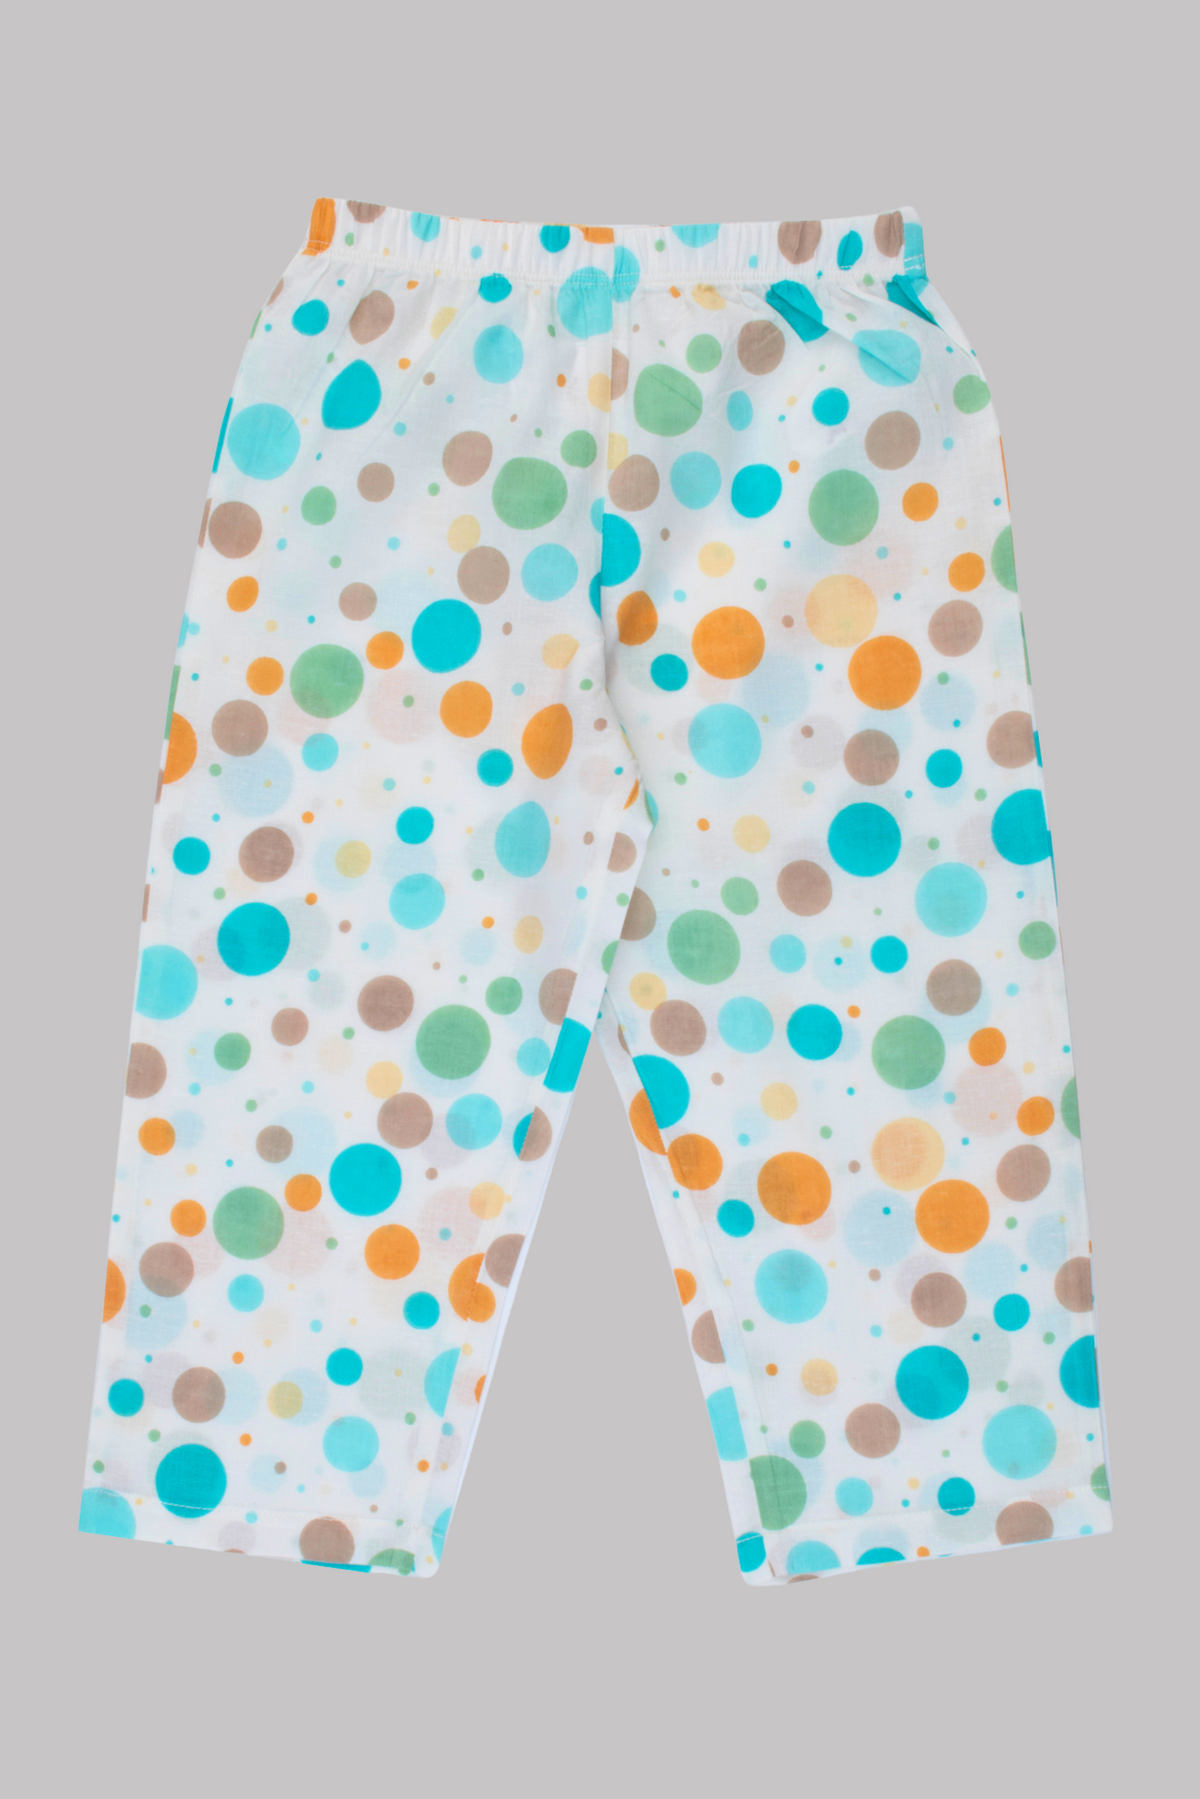 Confetti Dreams Kurta Pyjama Set For Kids 4